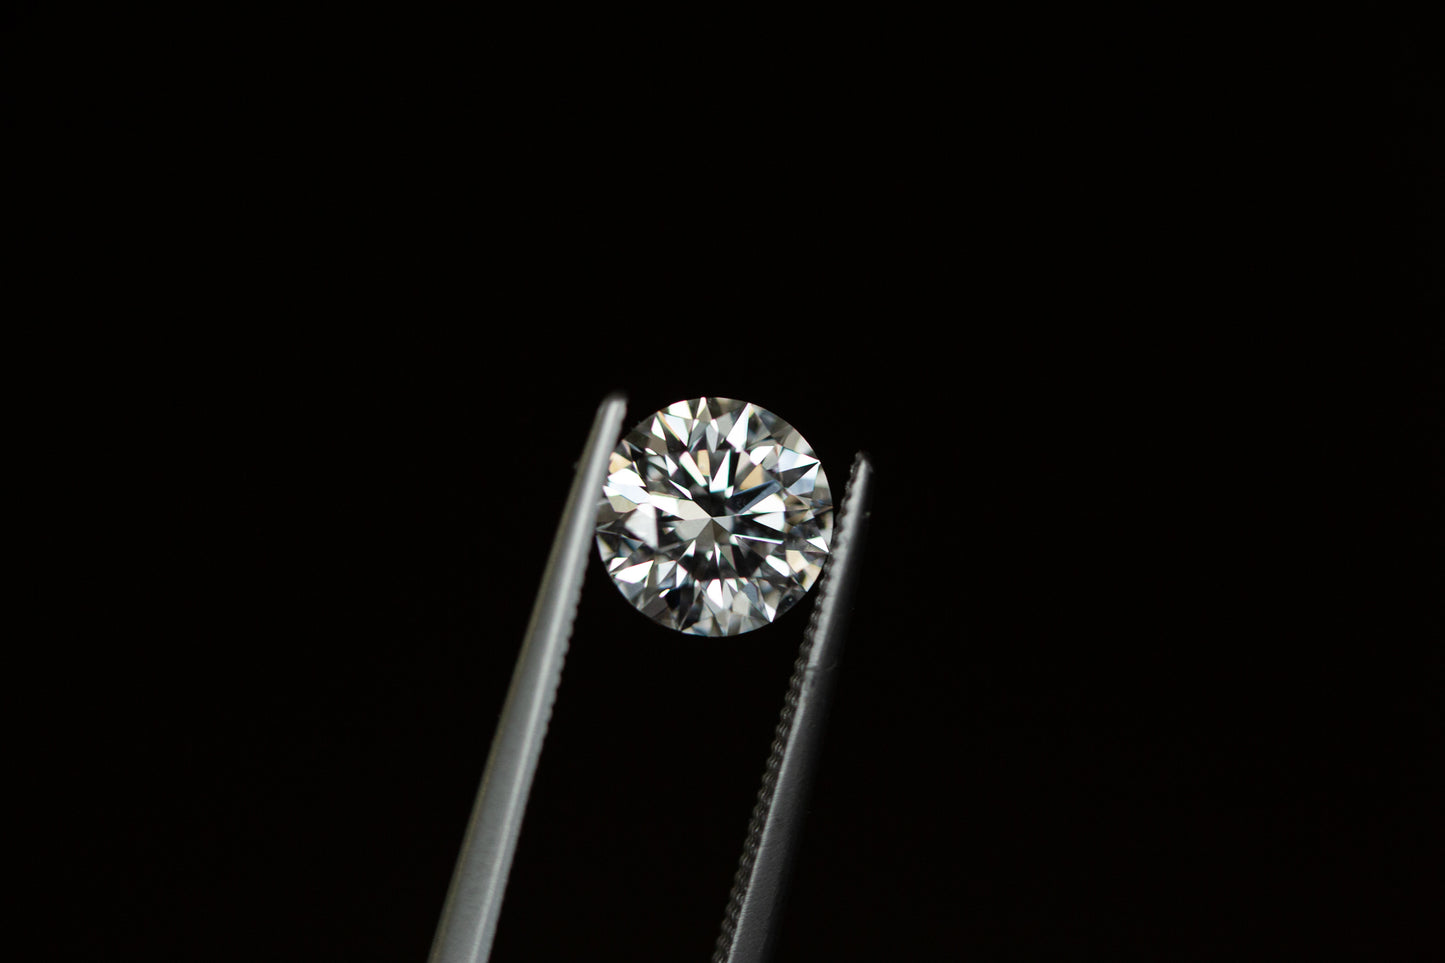 Load image into Gallery viewer, 1.28ct G VS1 round lab diamond
